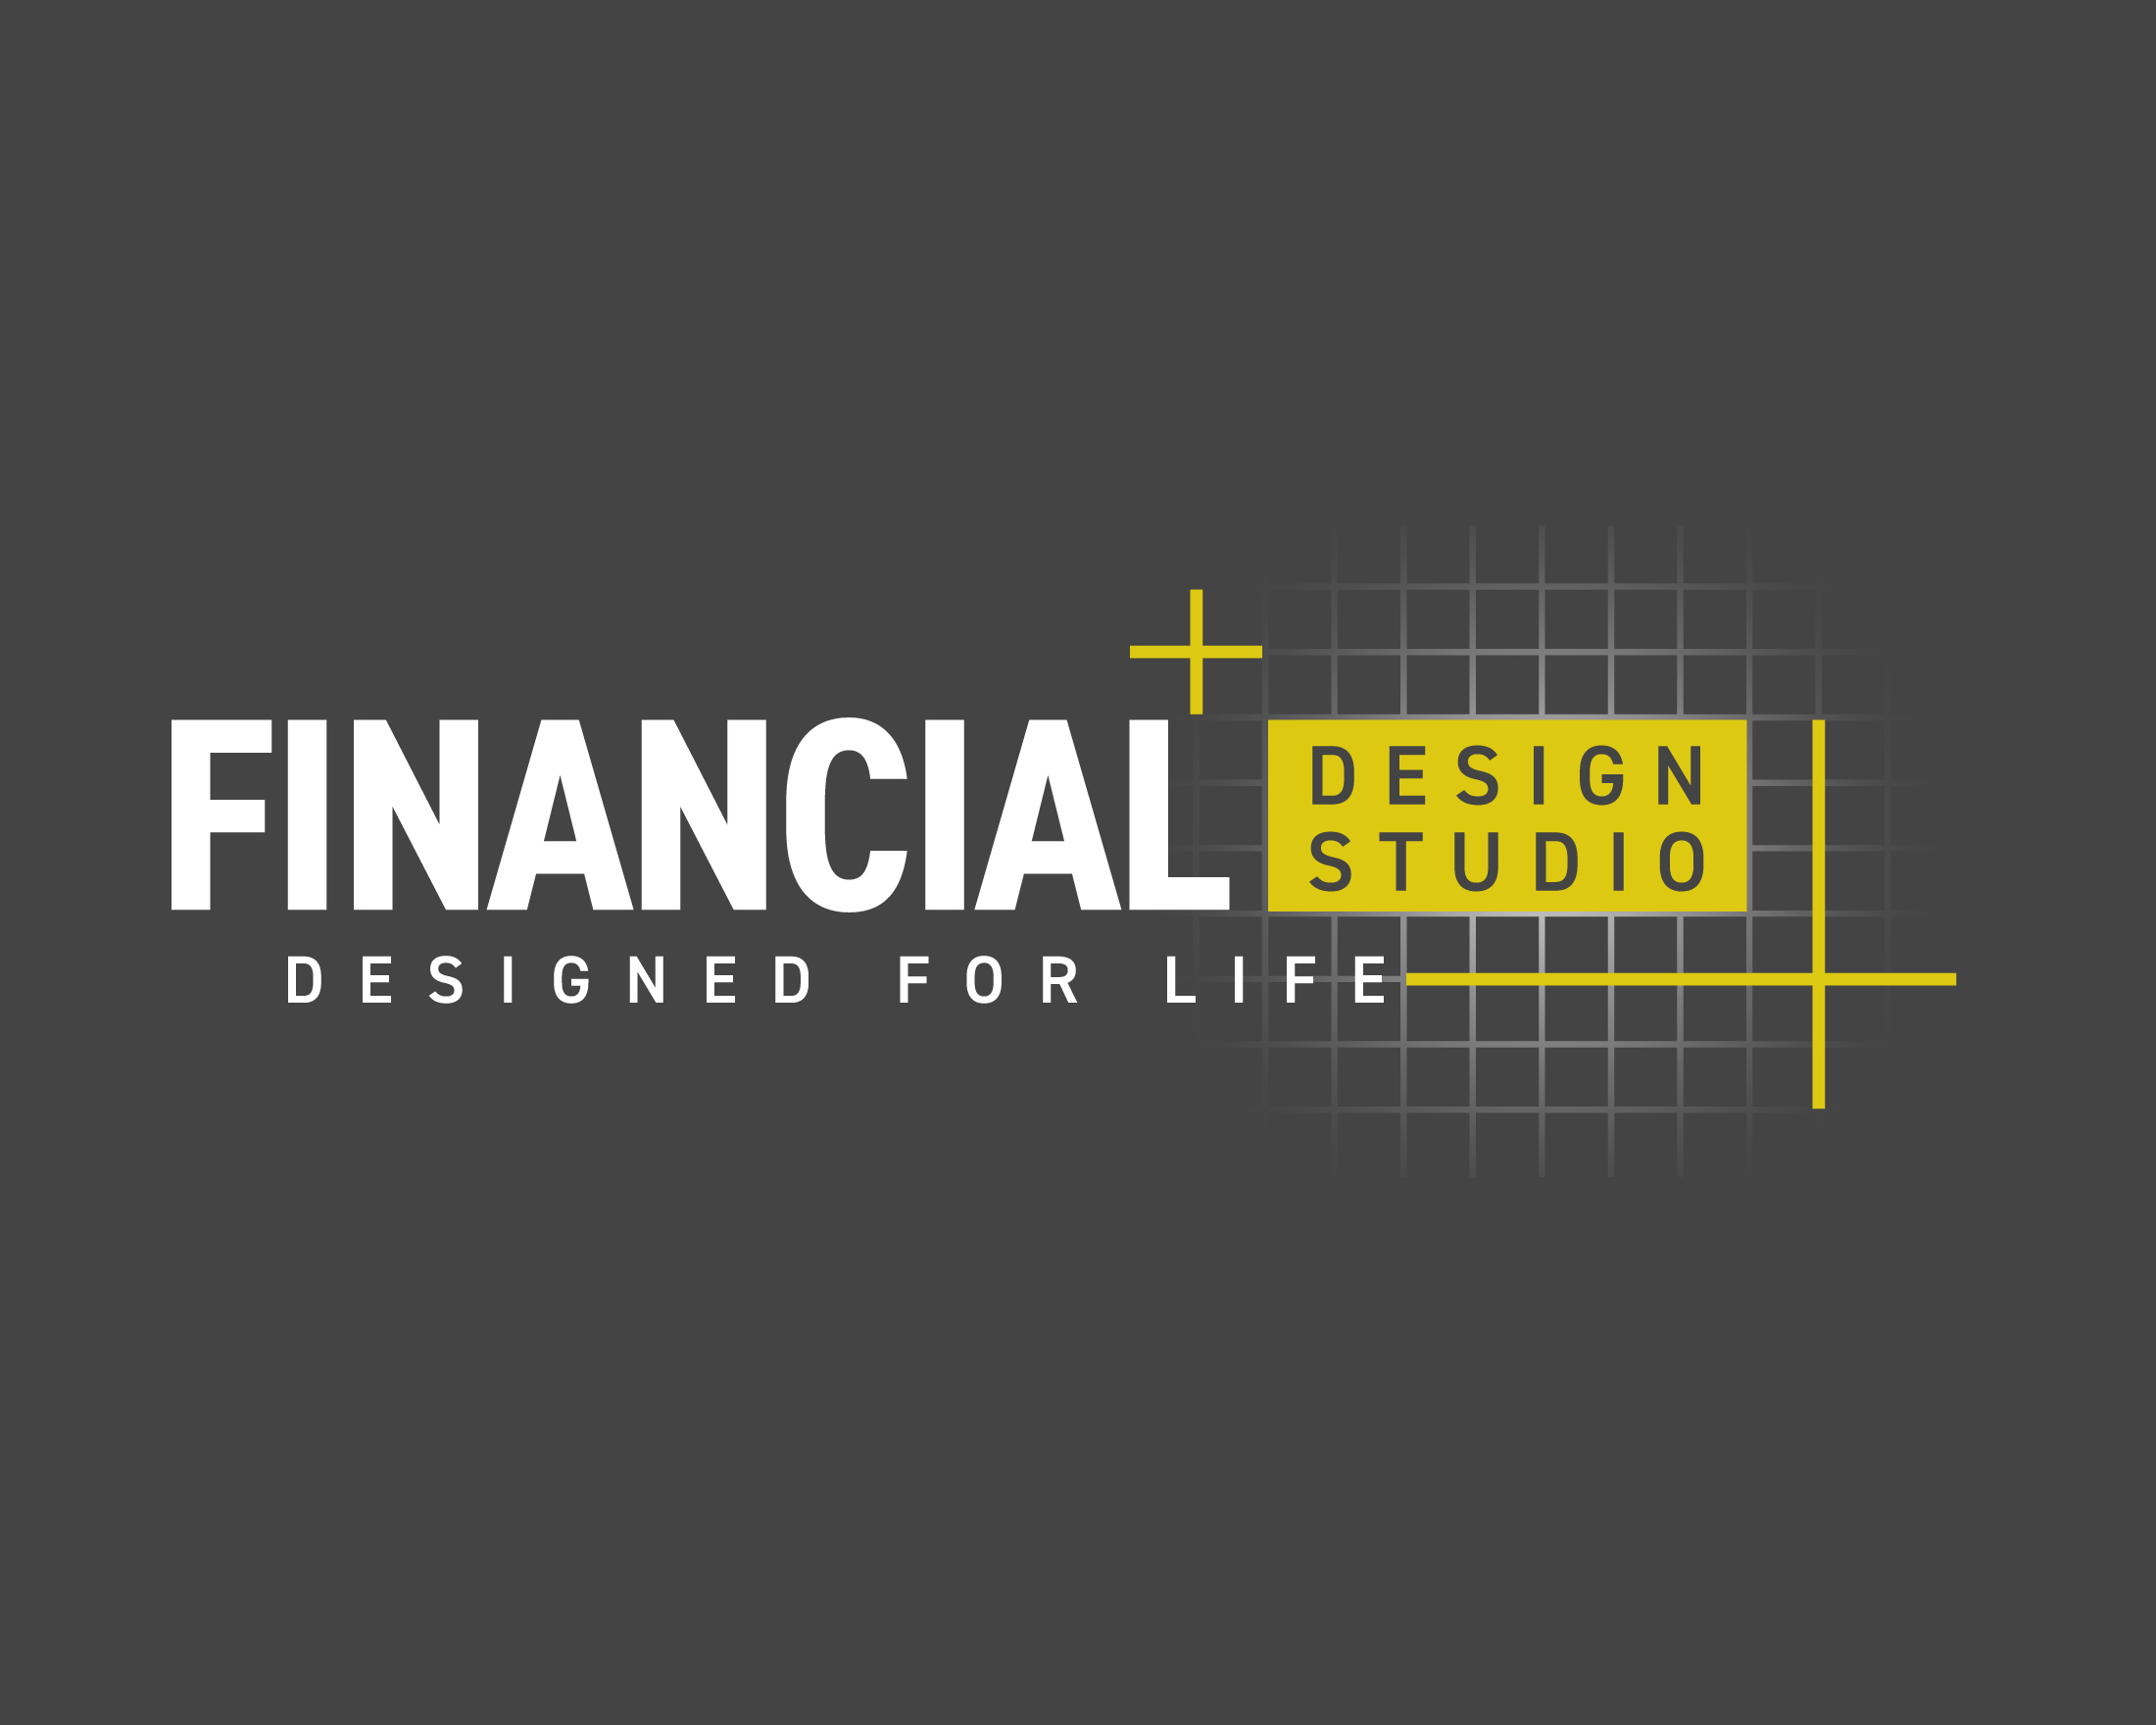 Financial Design Studio, Inc.